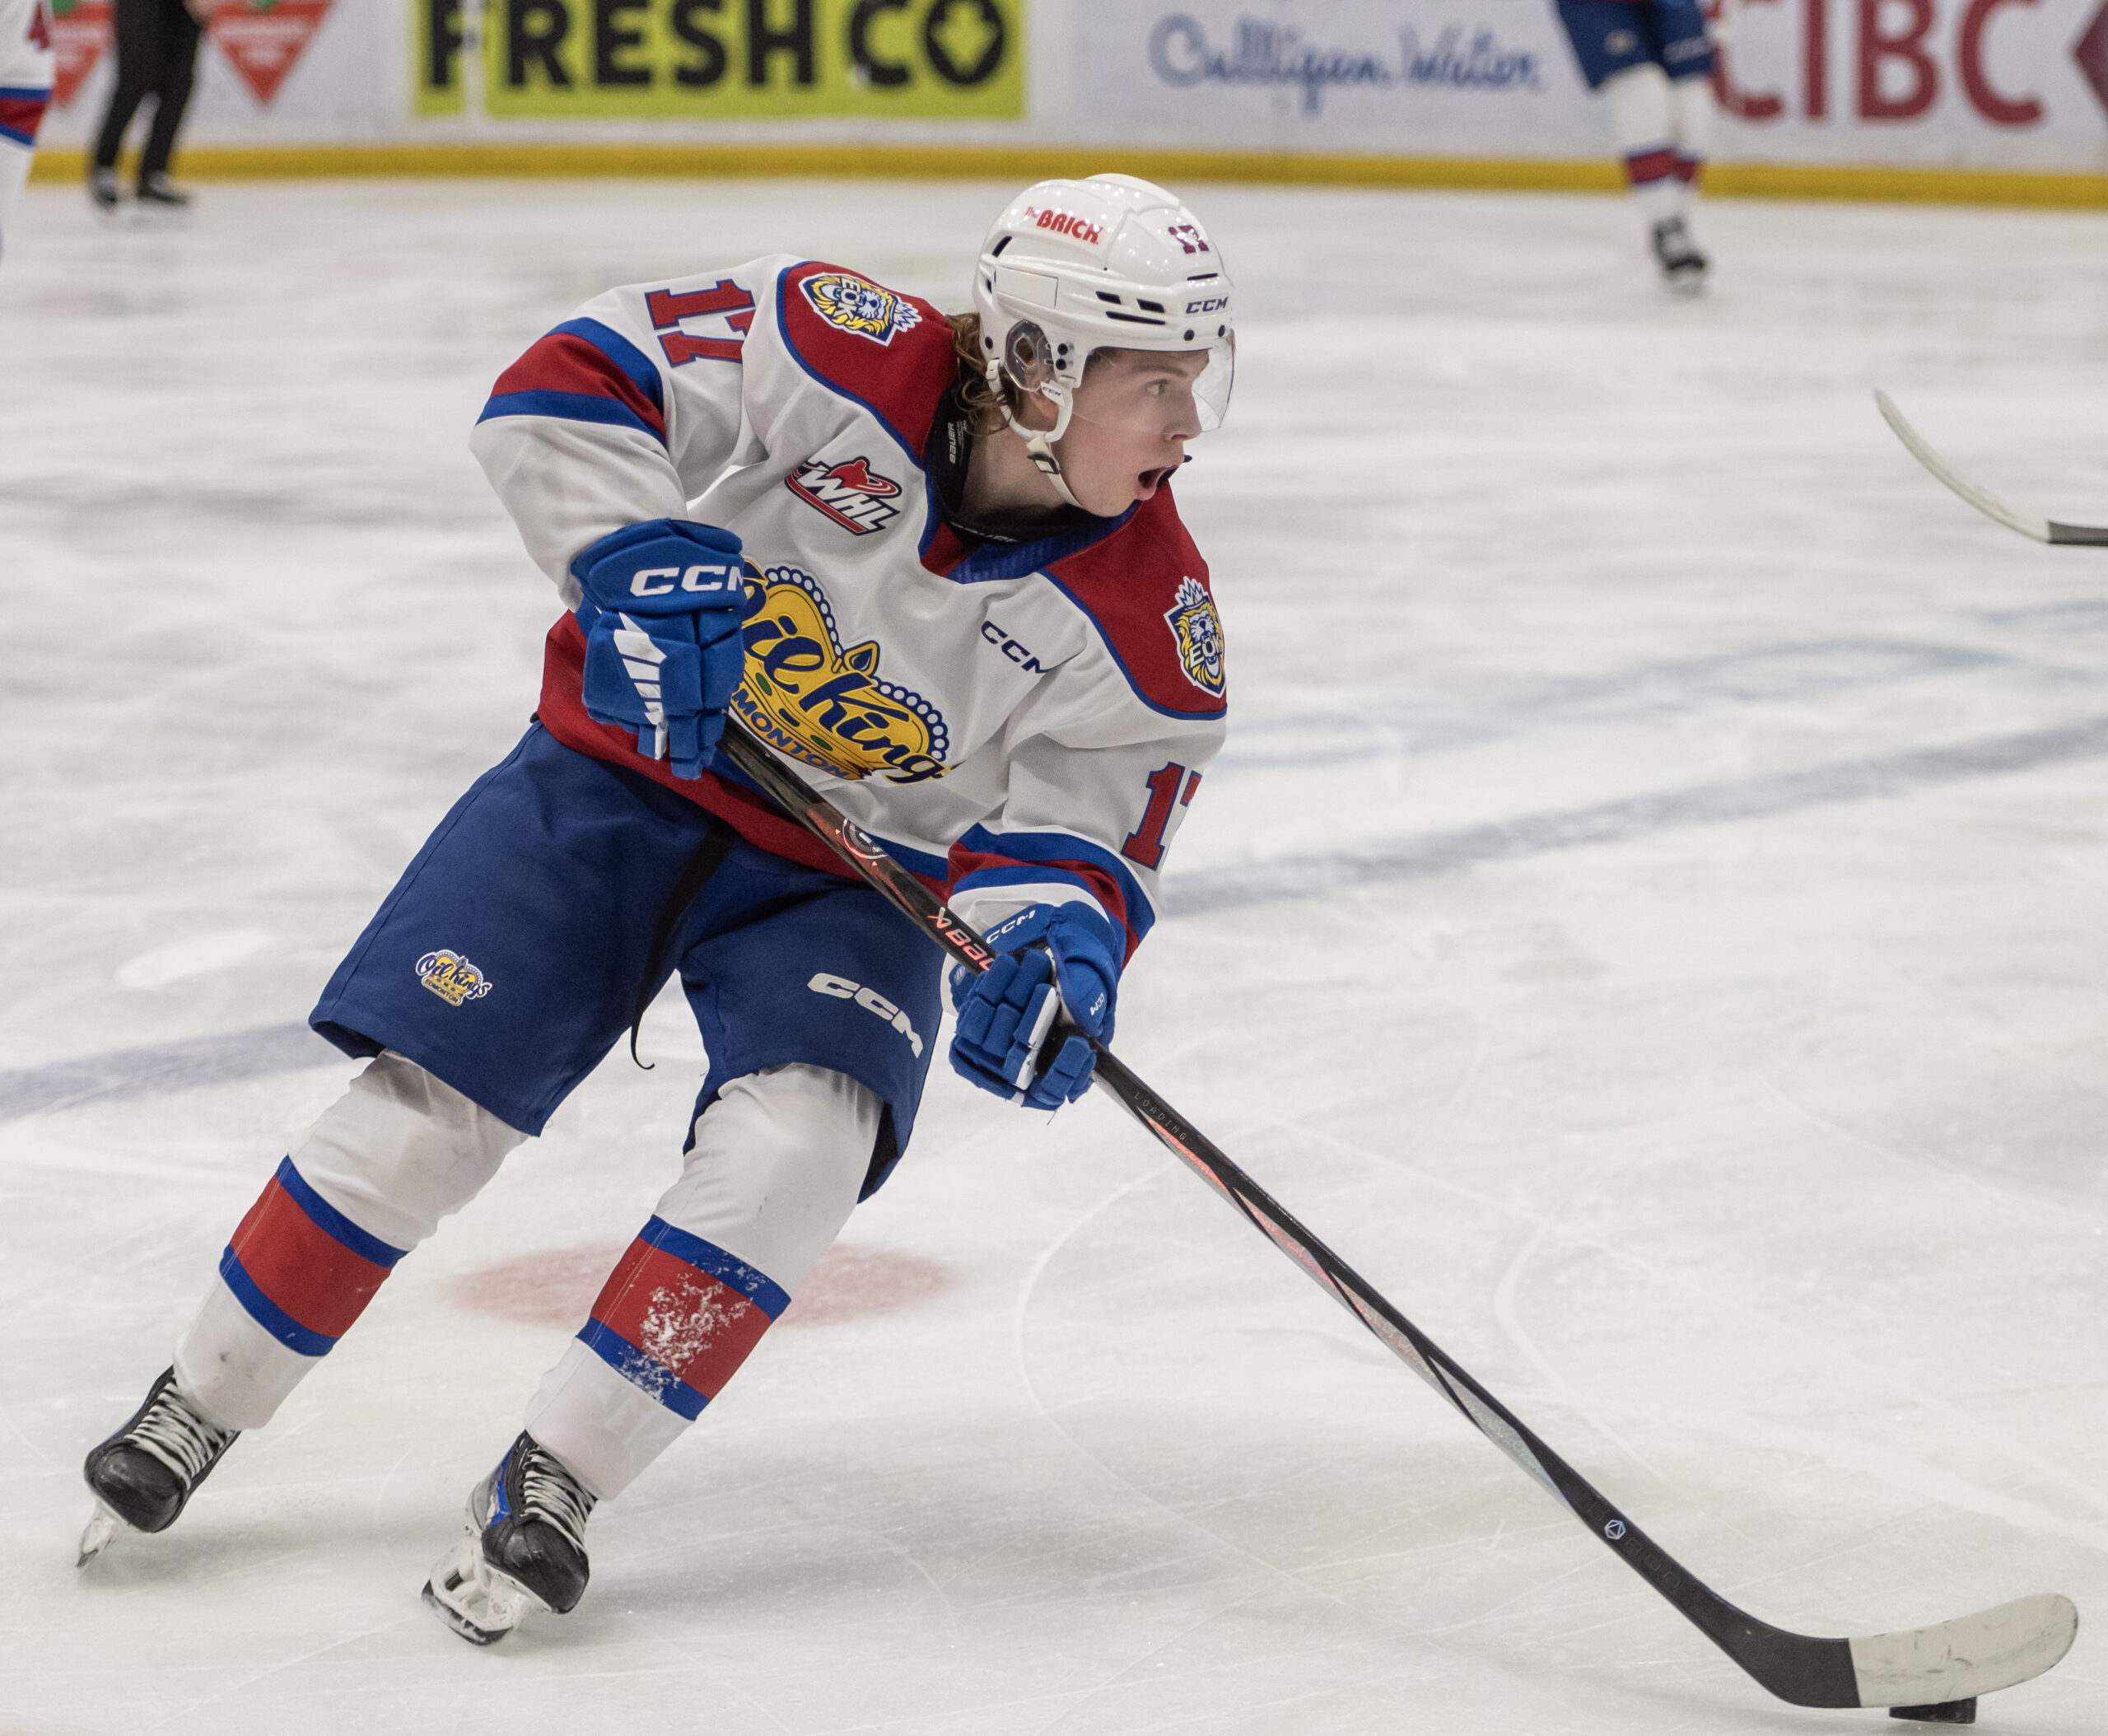 Gavin Hodnett NHL Draft Prospect Profile: Stats, Scouting Report & Potential